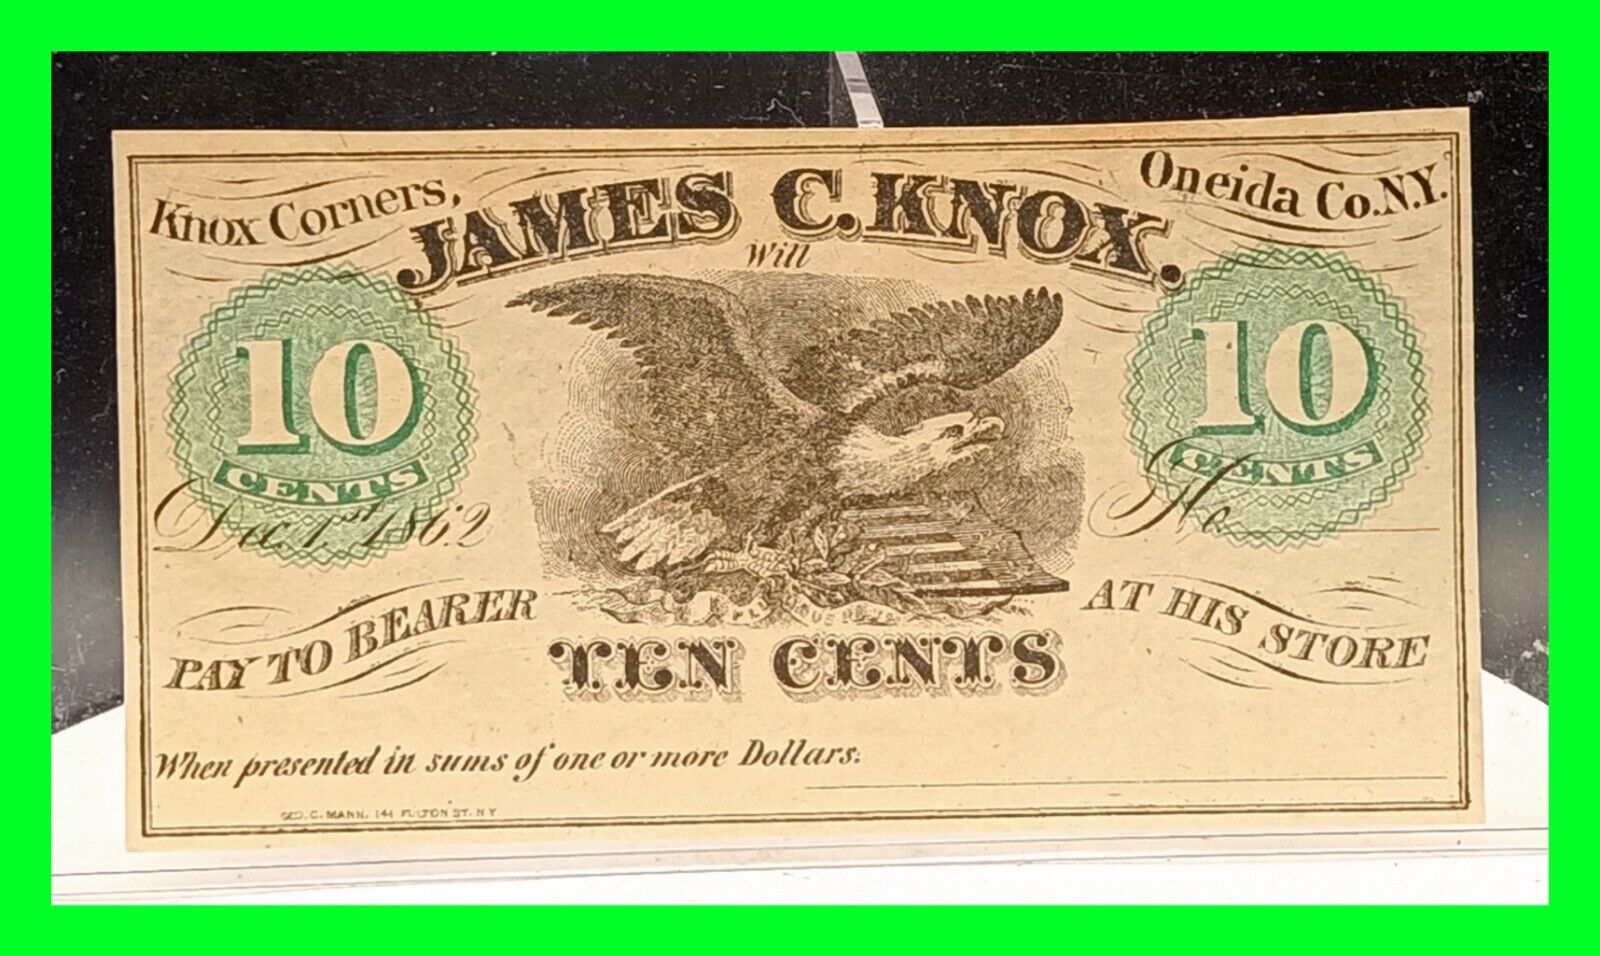 Rare 1862 James C. Knox., Knox Corners, Oneida New York 10c Note - High Grade